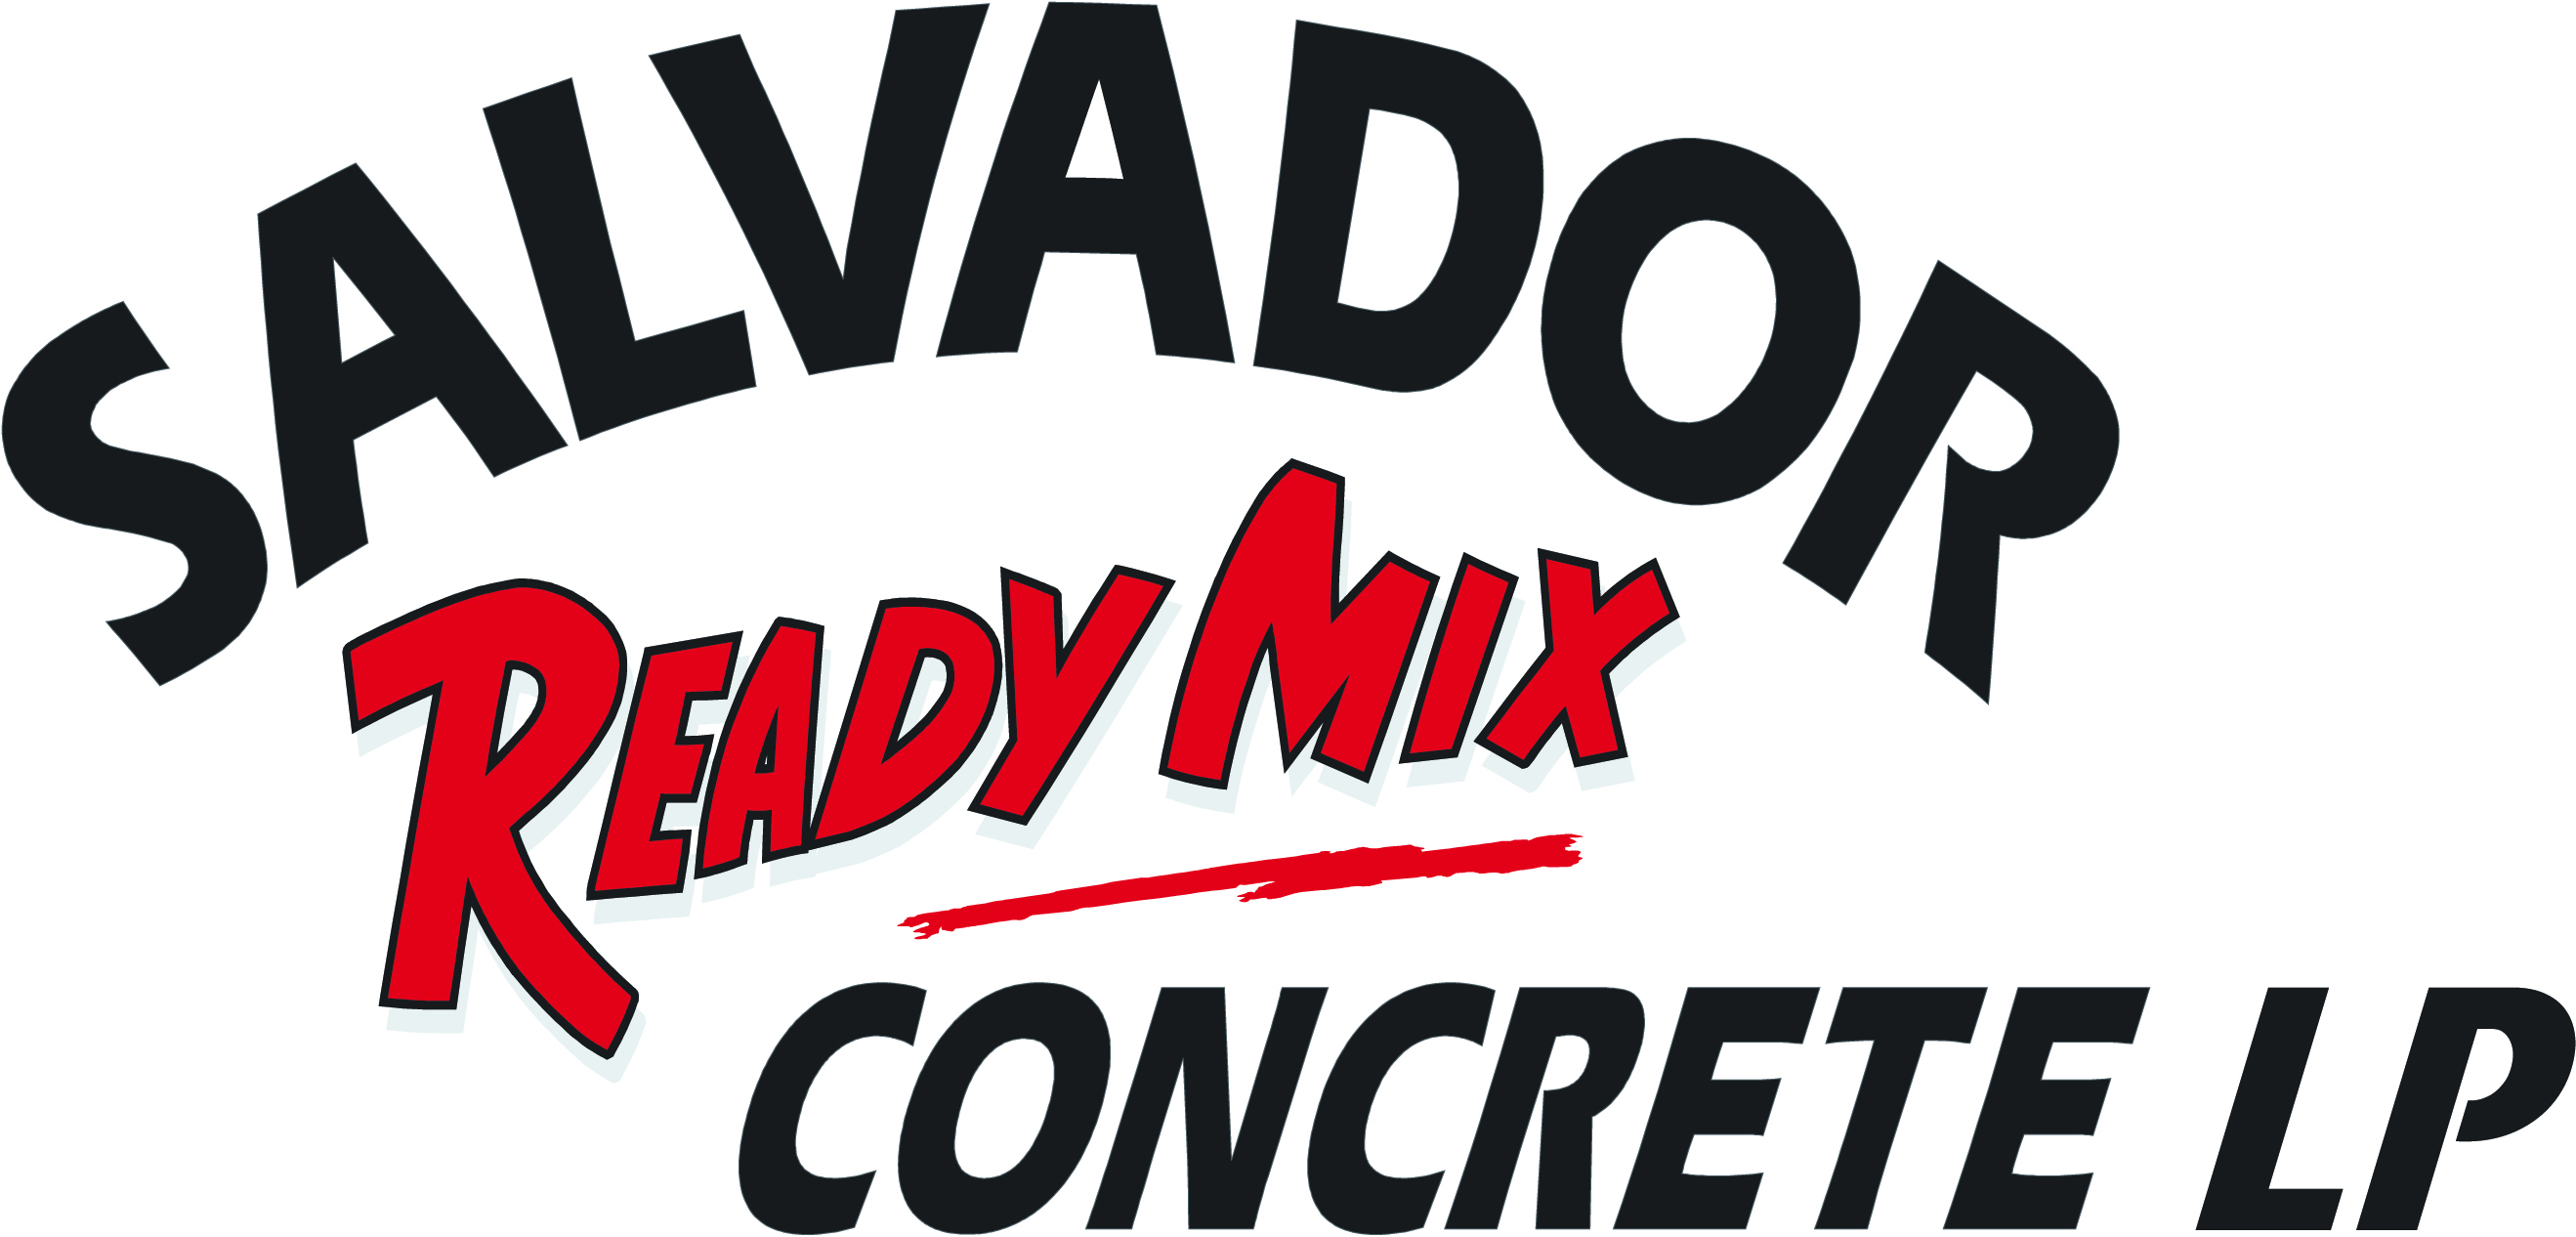 Salvador Ready Mix Concrete is hiring!